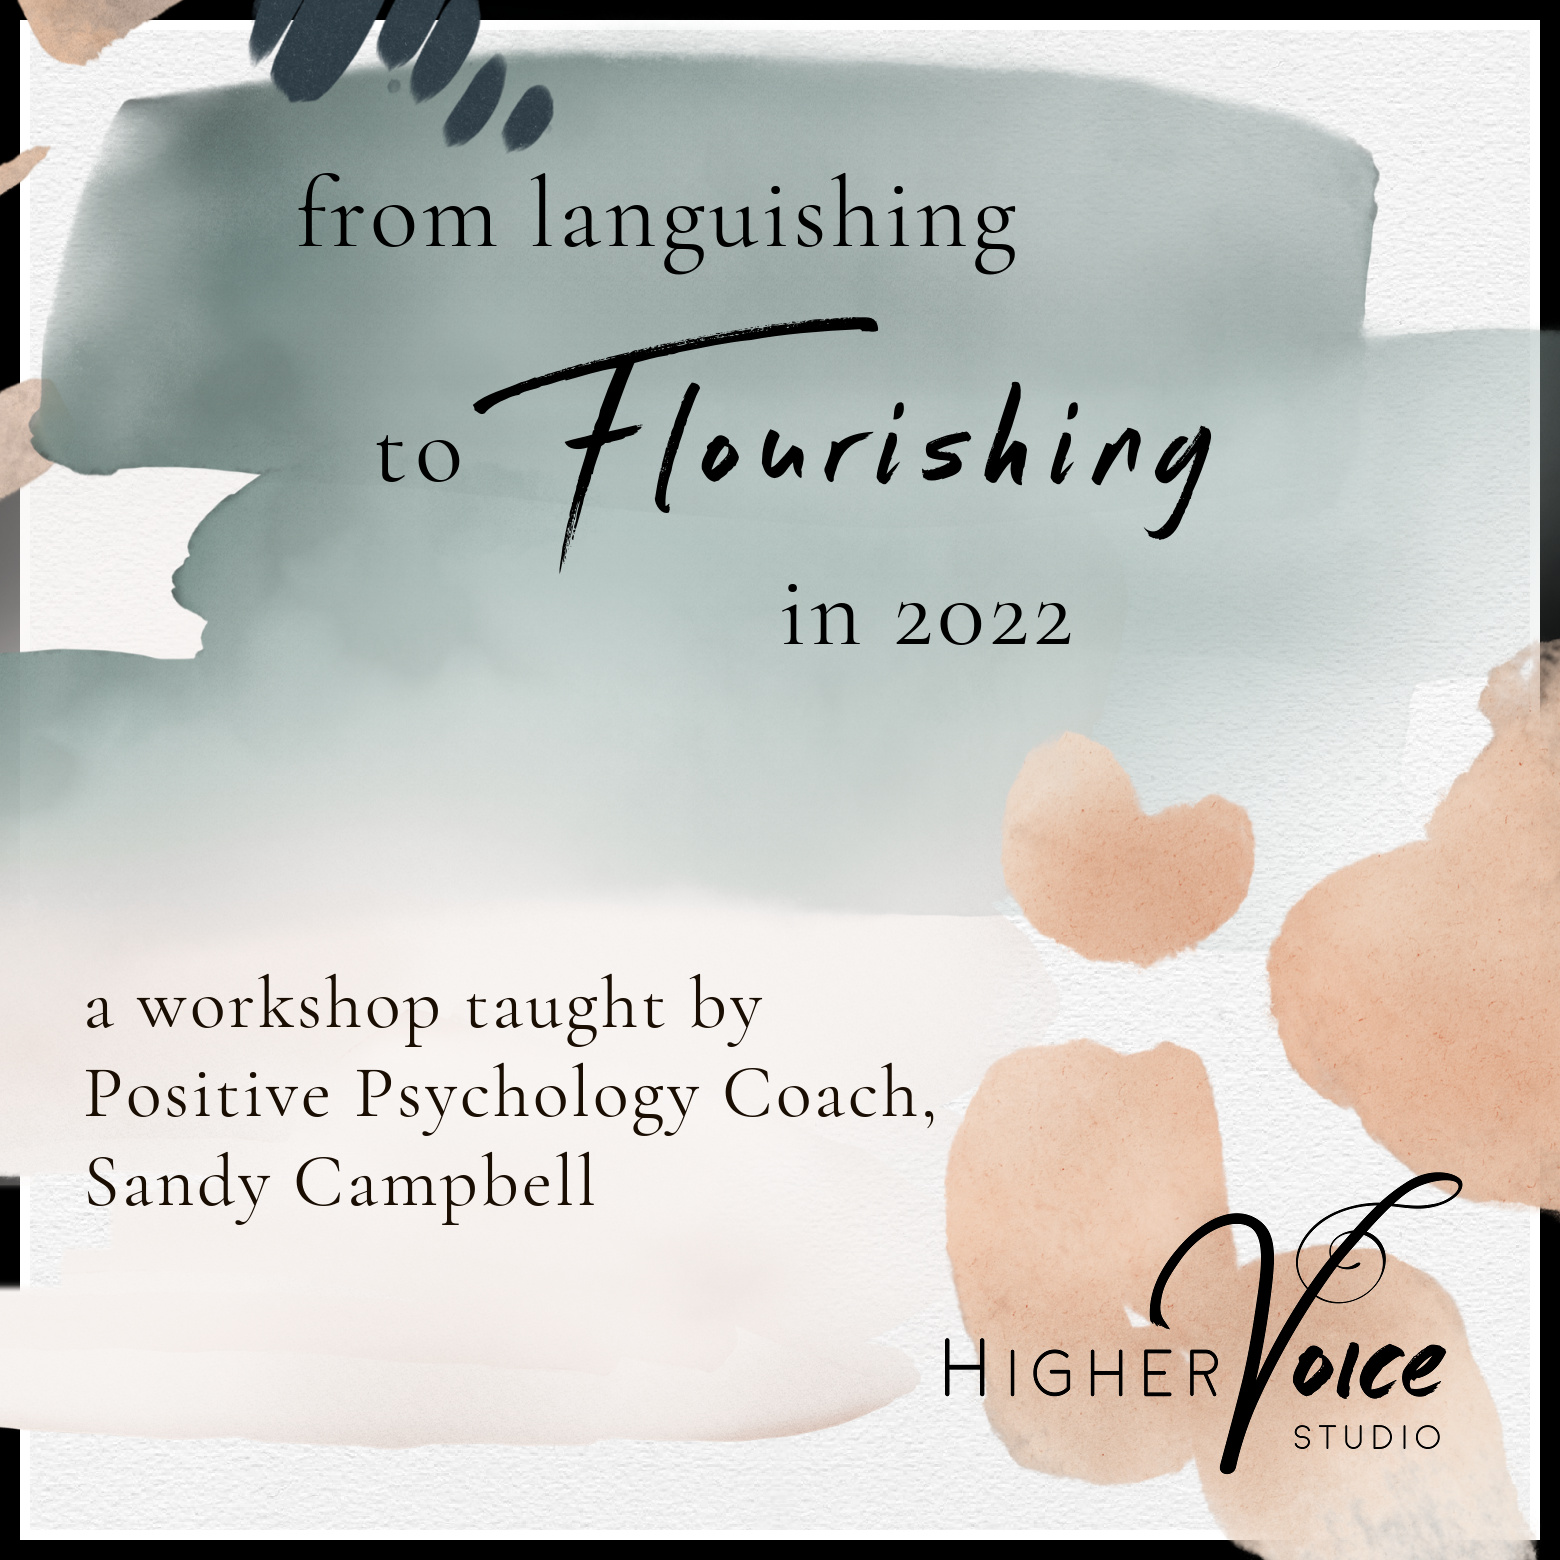 Languishing to flourishing